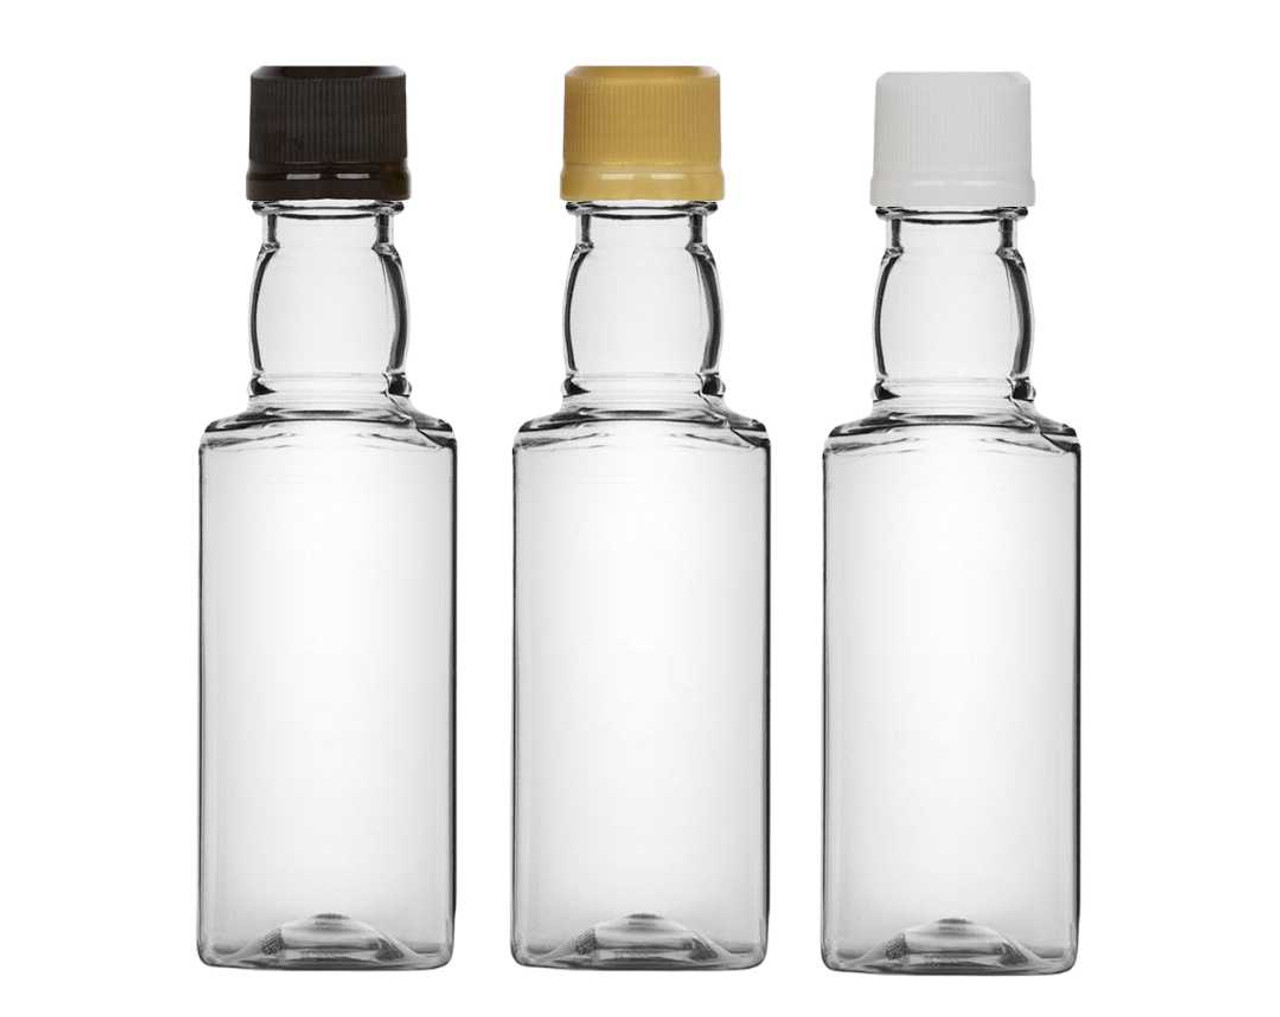 https://cdn11.bigcommerce.com/s-1ybtx/images/stencil/1280x1280/products/1690/7851/17-oz-50-ml-mini-Square-Plastic-Liquor-Bottle-with-choice-of-color-cap_7084__94930.1699989583.jpg?c=2